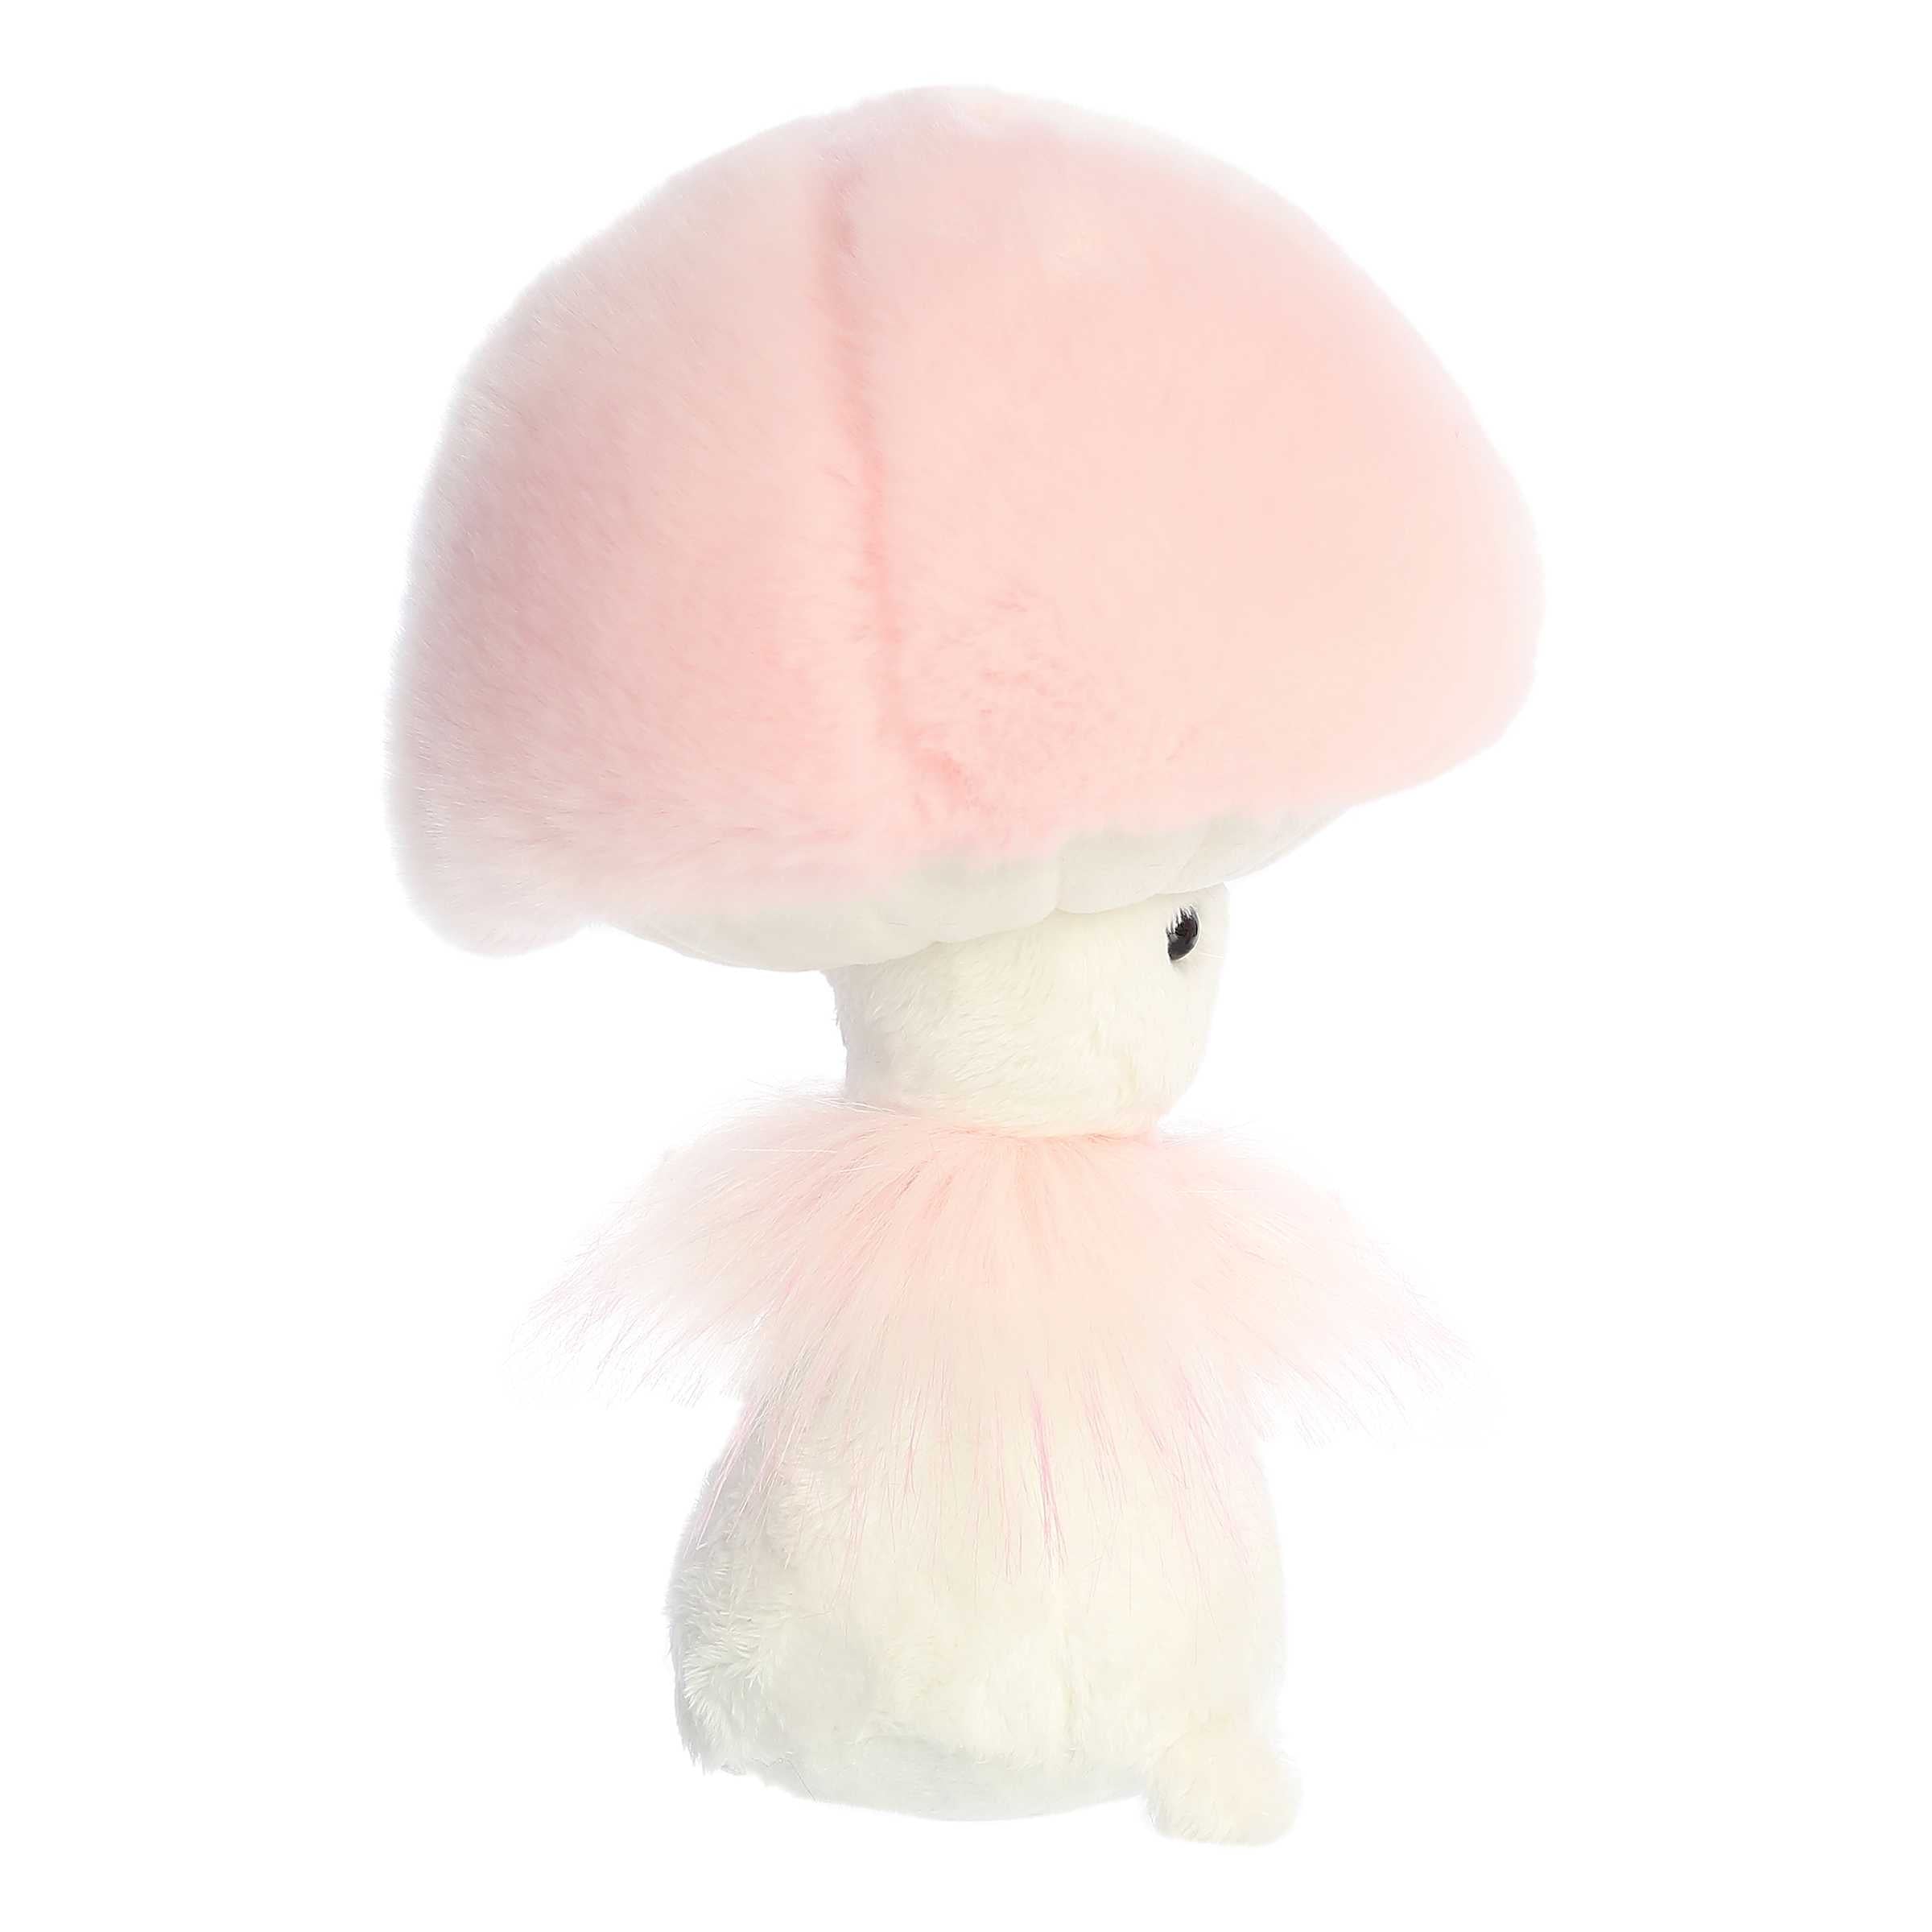 Pretty Mint mushroom plush from Fungi Friends, with an aqua cap and mushroom plush body